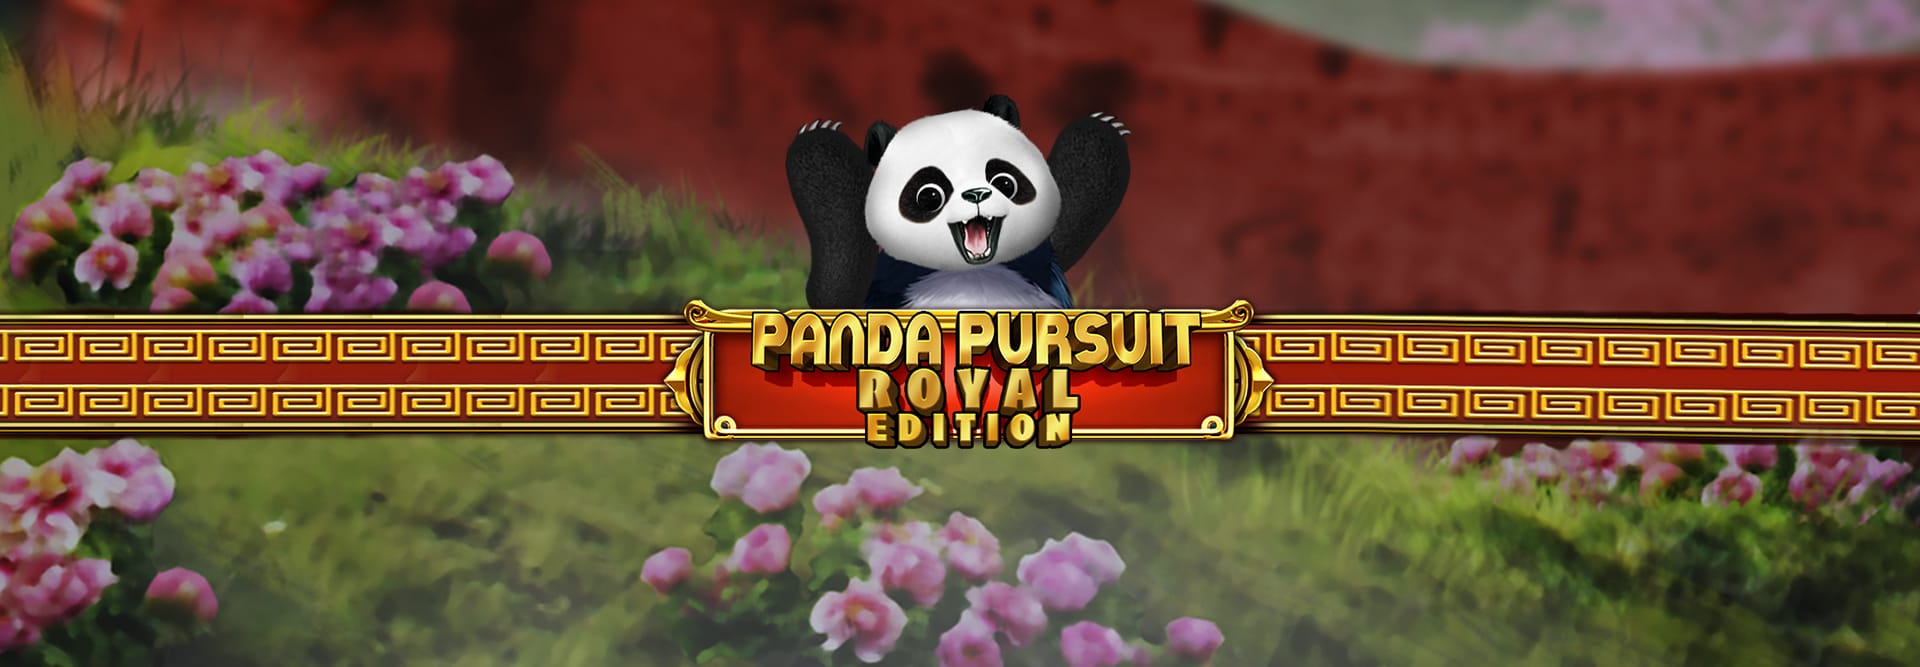 Panda Pursuit Royal Edition logo